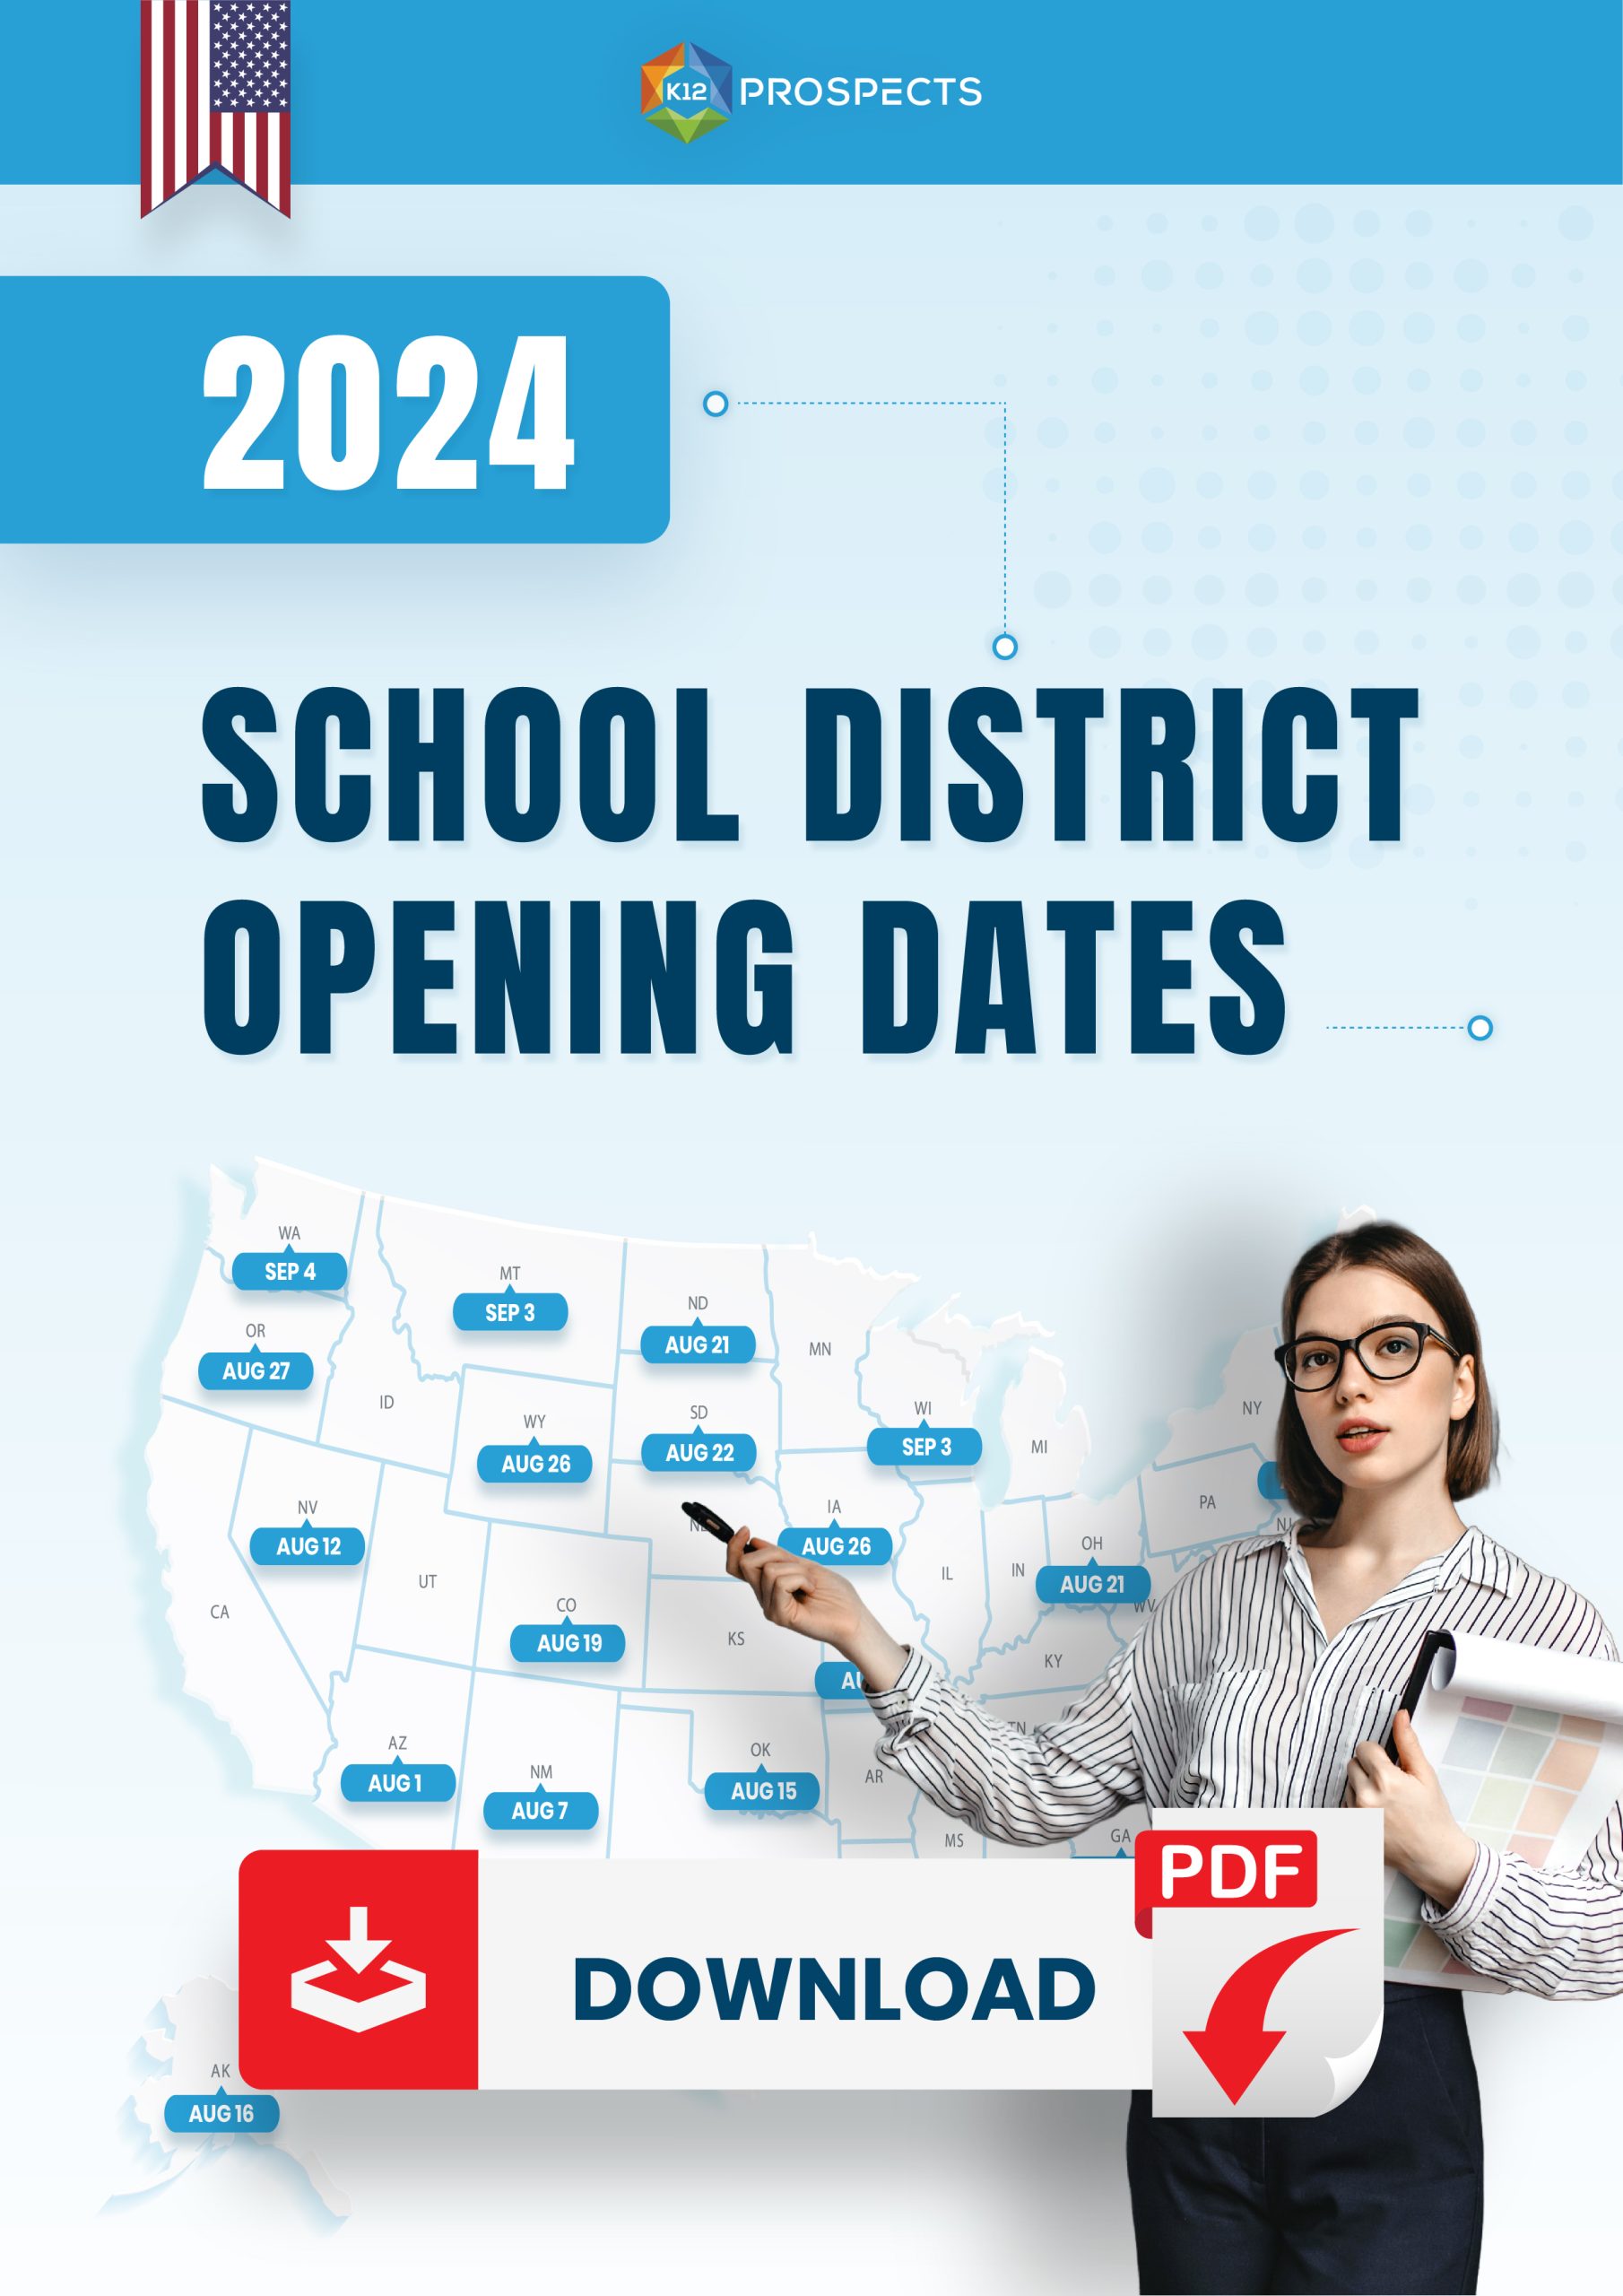 Top Image 2024 School District Opening Dates